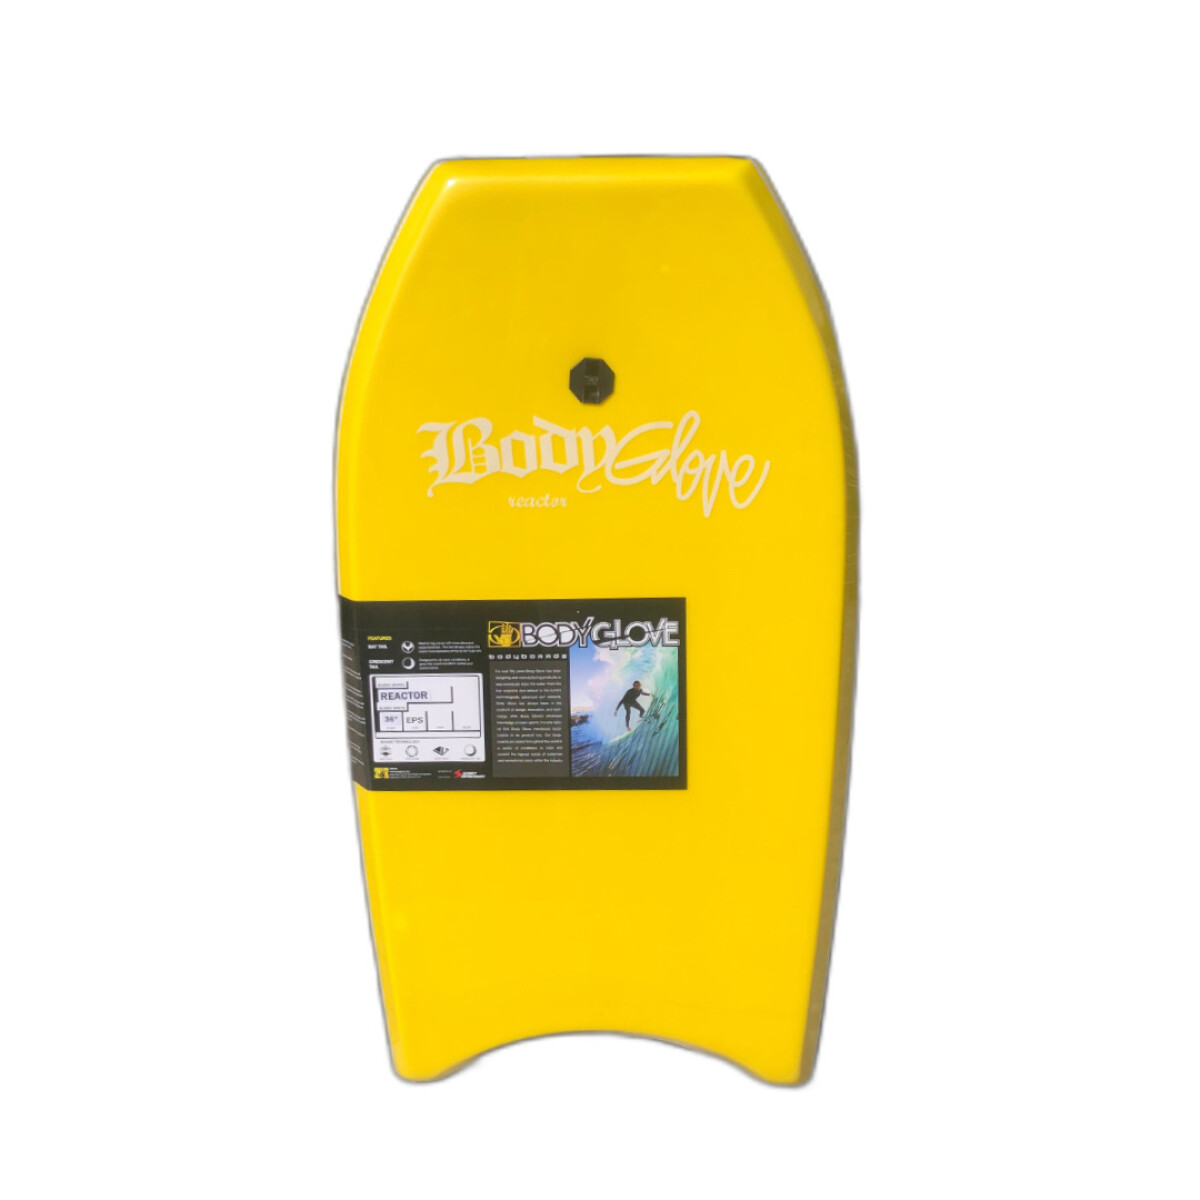 Tabla BodyBoard Morey Body Glove Reactor 36 - Amarillo 